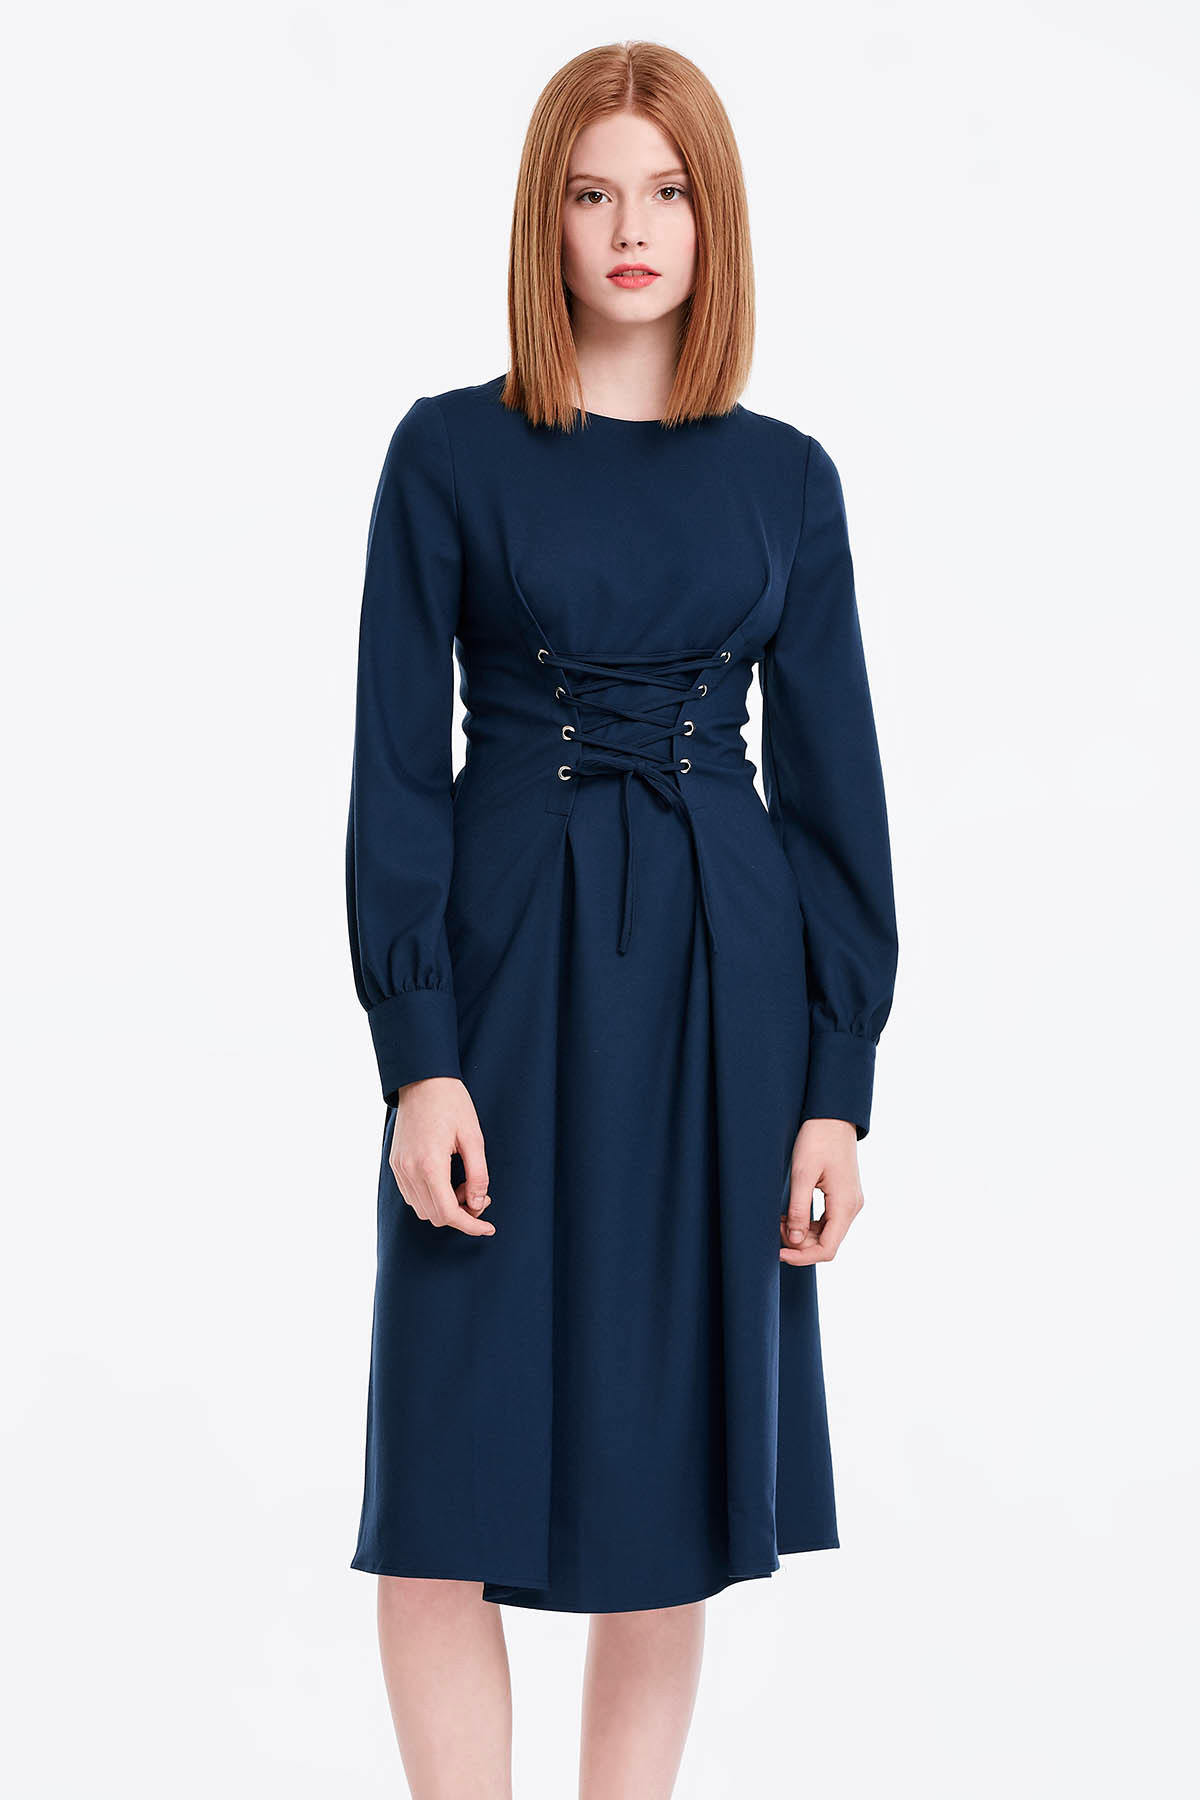 Laced dark blue dress, photo 1